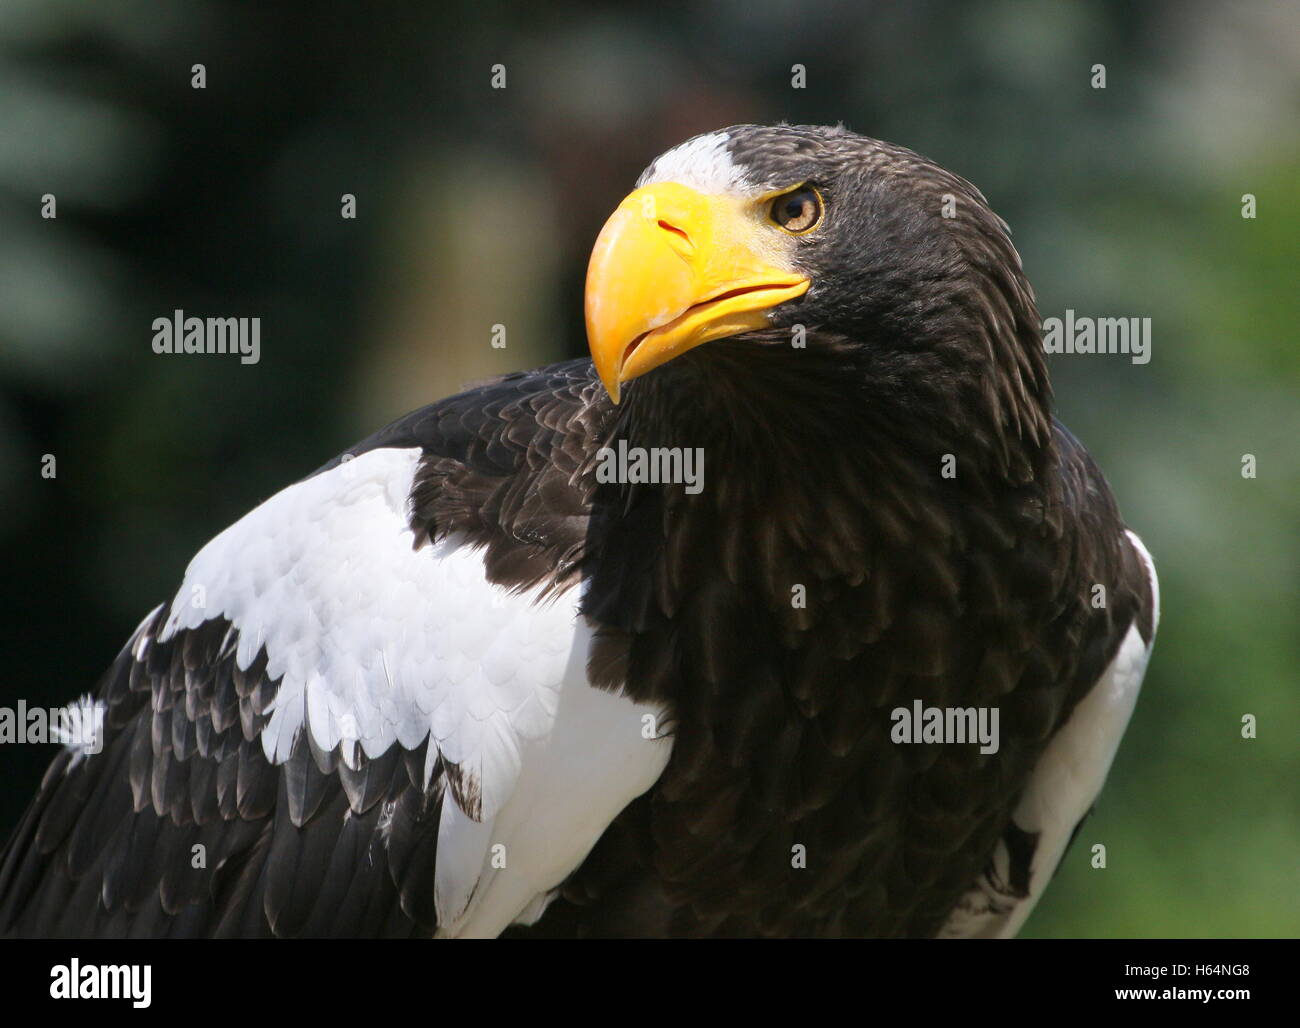 East Asian Steller's sea eagle (Haliaeetus pelagicus) portrait -  a.k.a. Pacific/ White-shouldered eagle Stock Photo